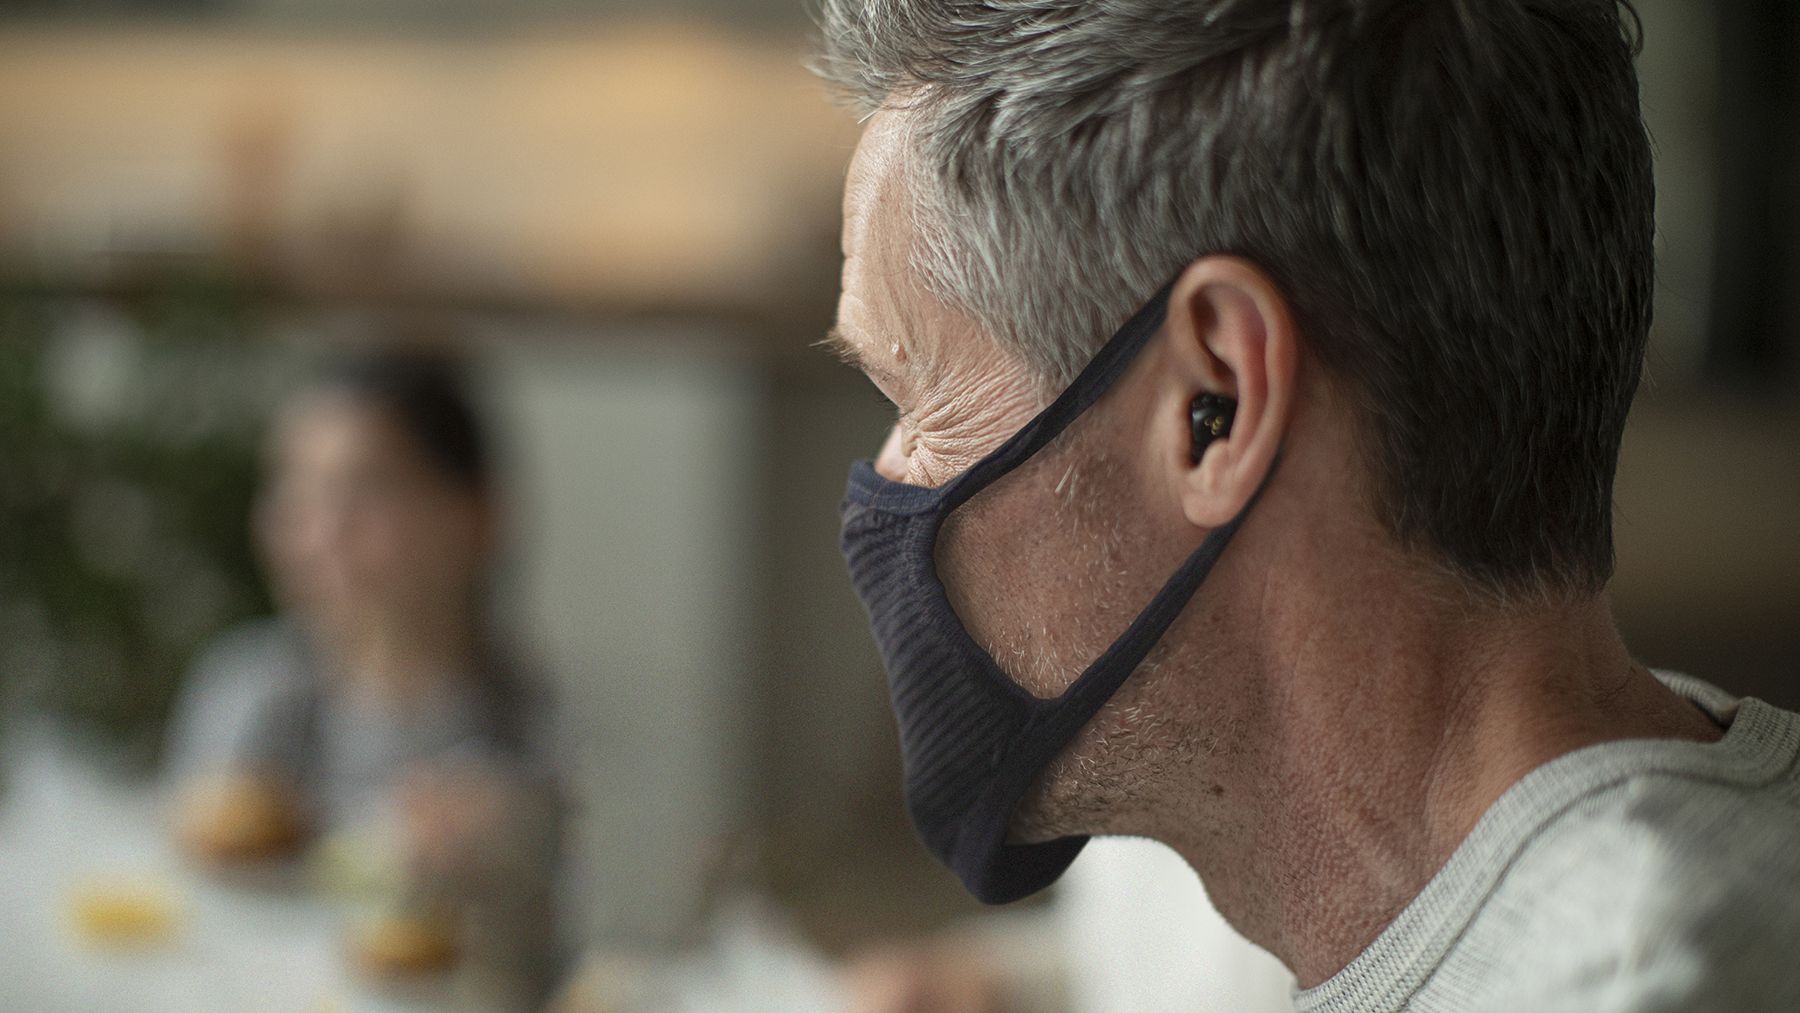 Starkey Livio Edge AI hearing aids worn by a man with a mask.